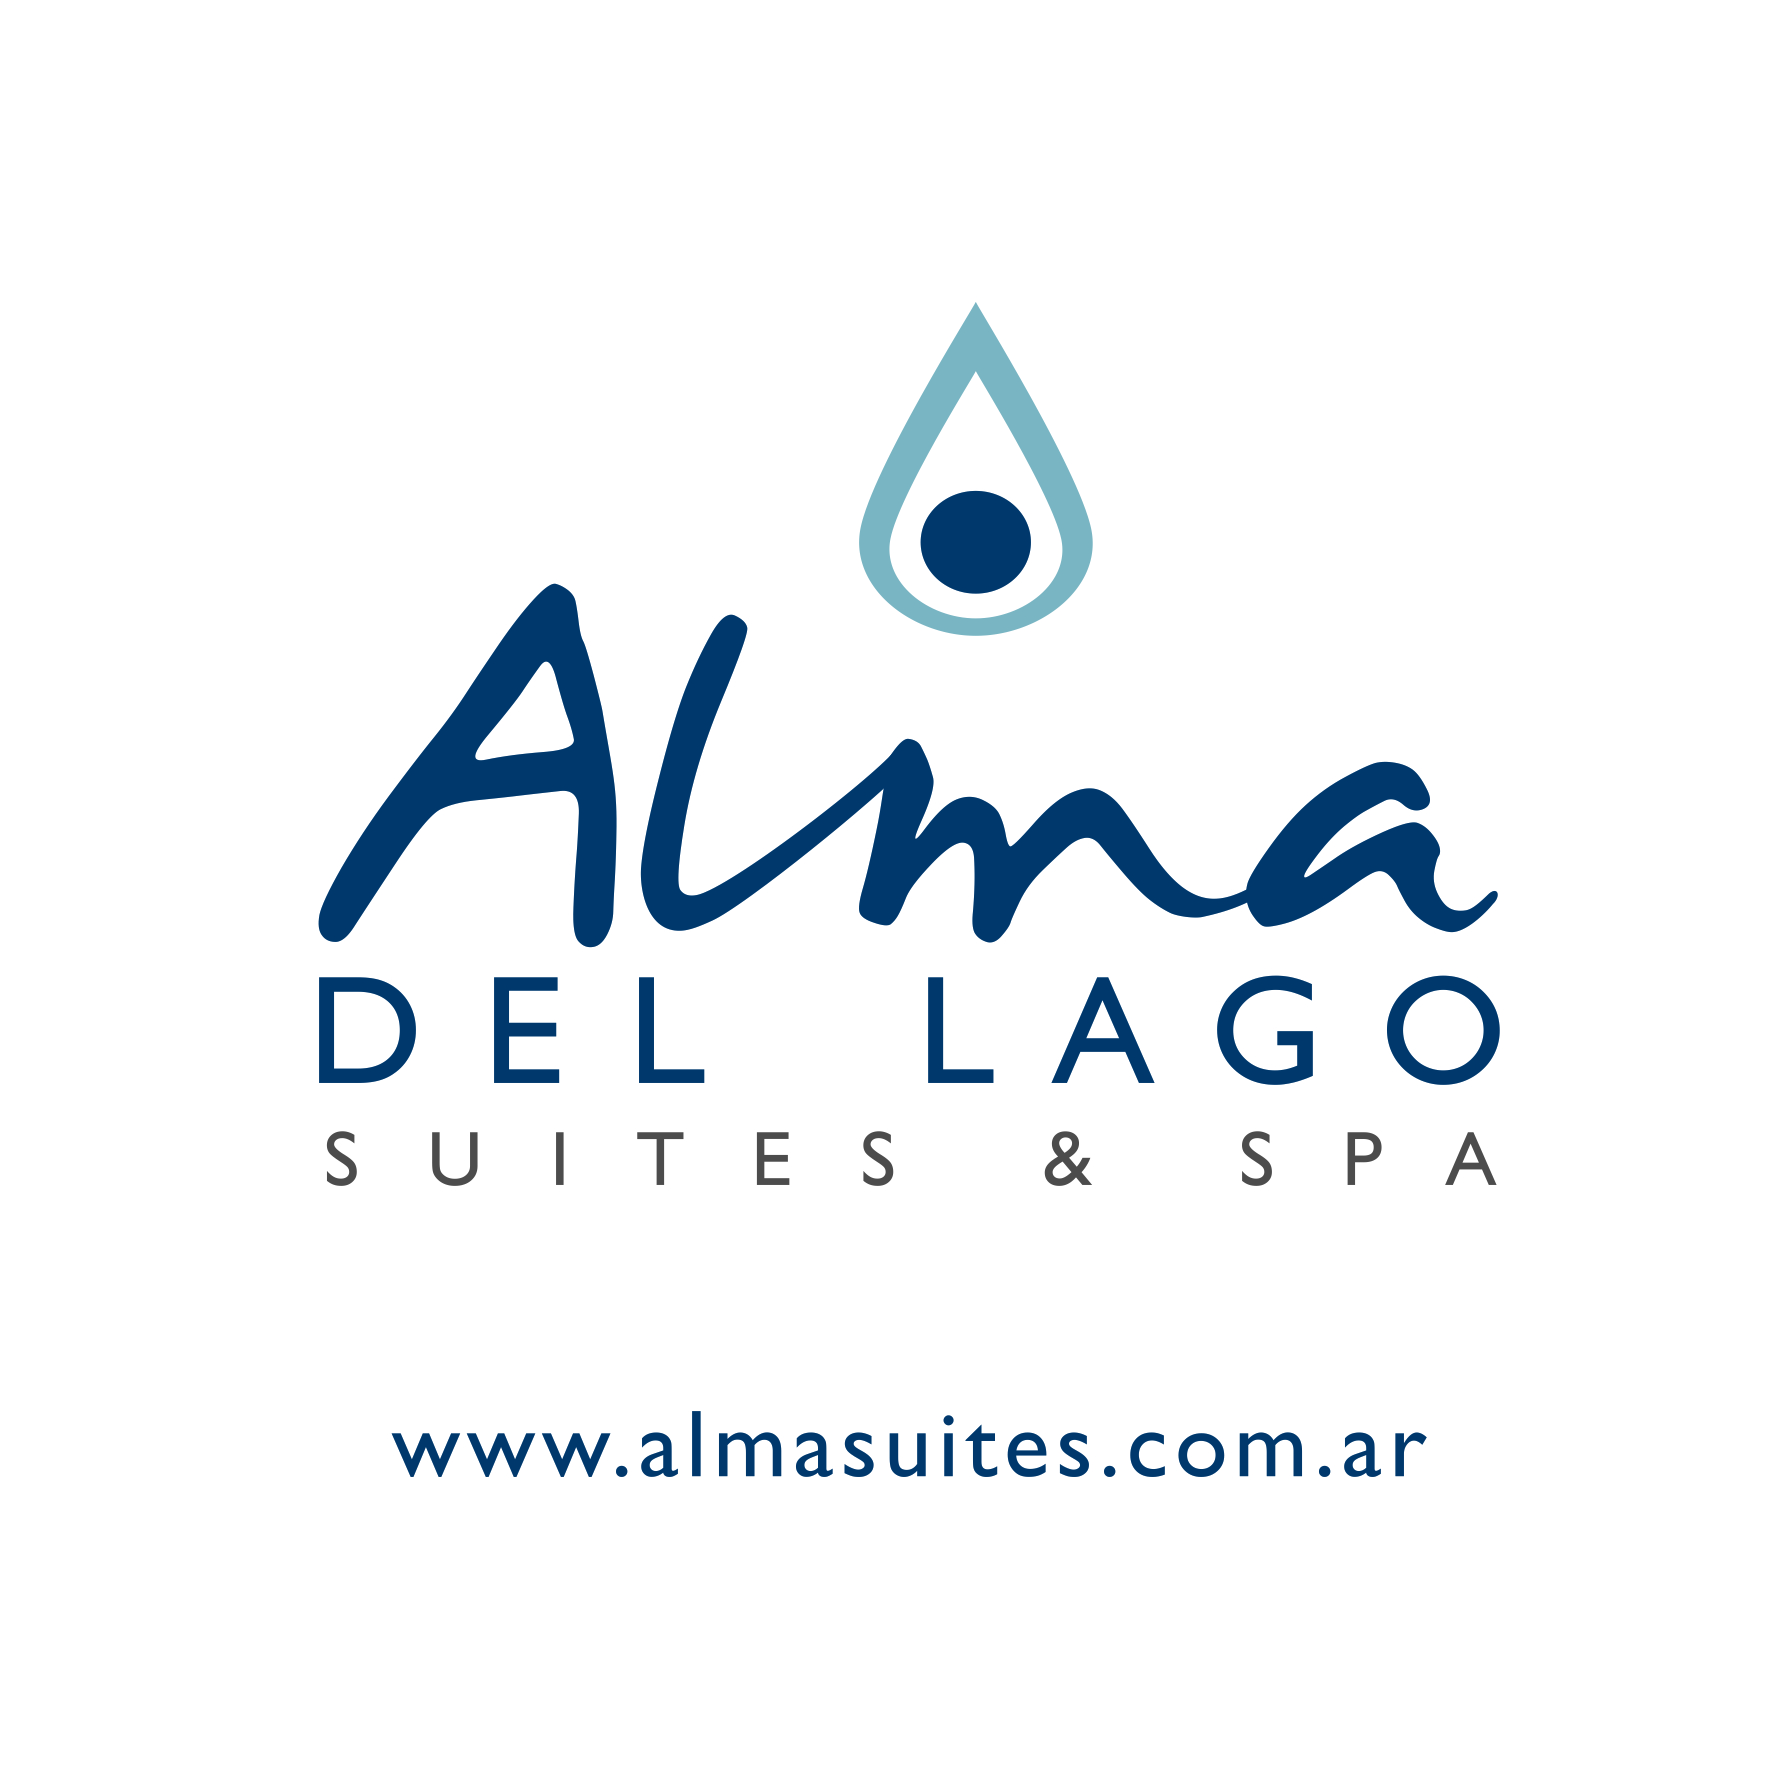 ALMA DEL LAGO SUITES & SPA